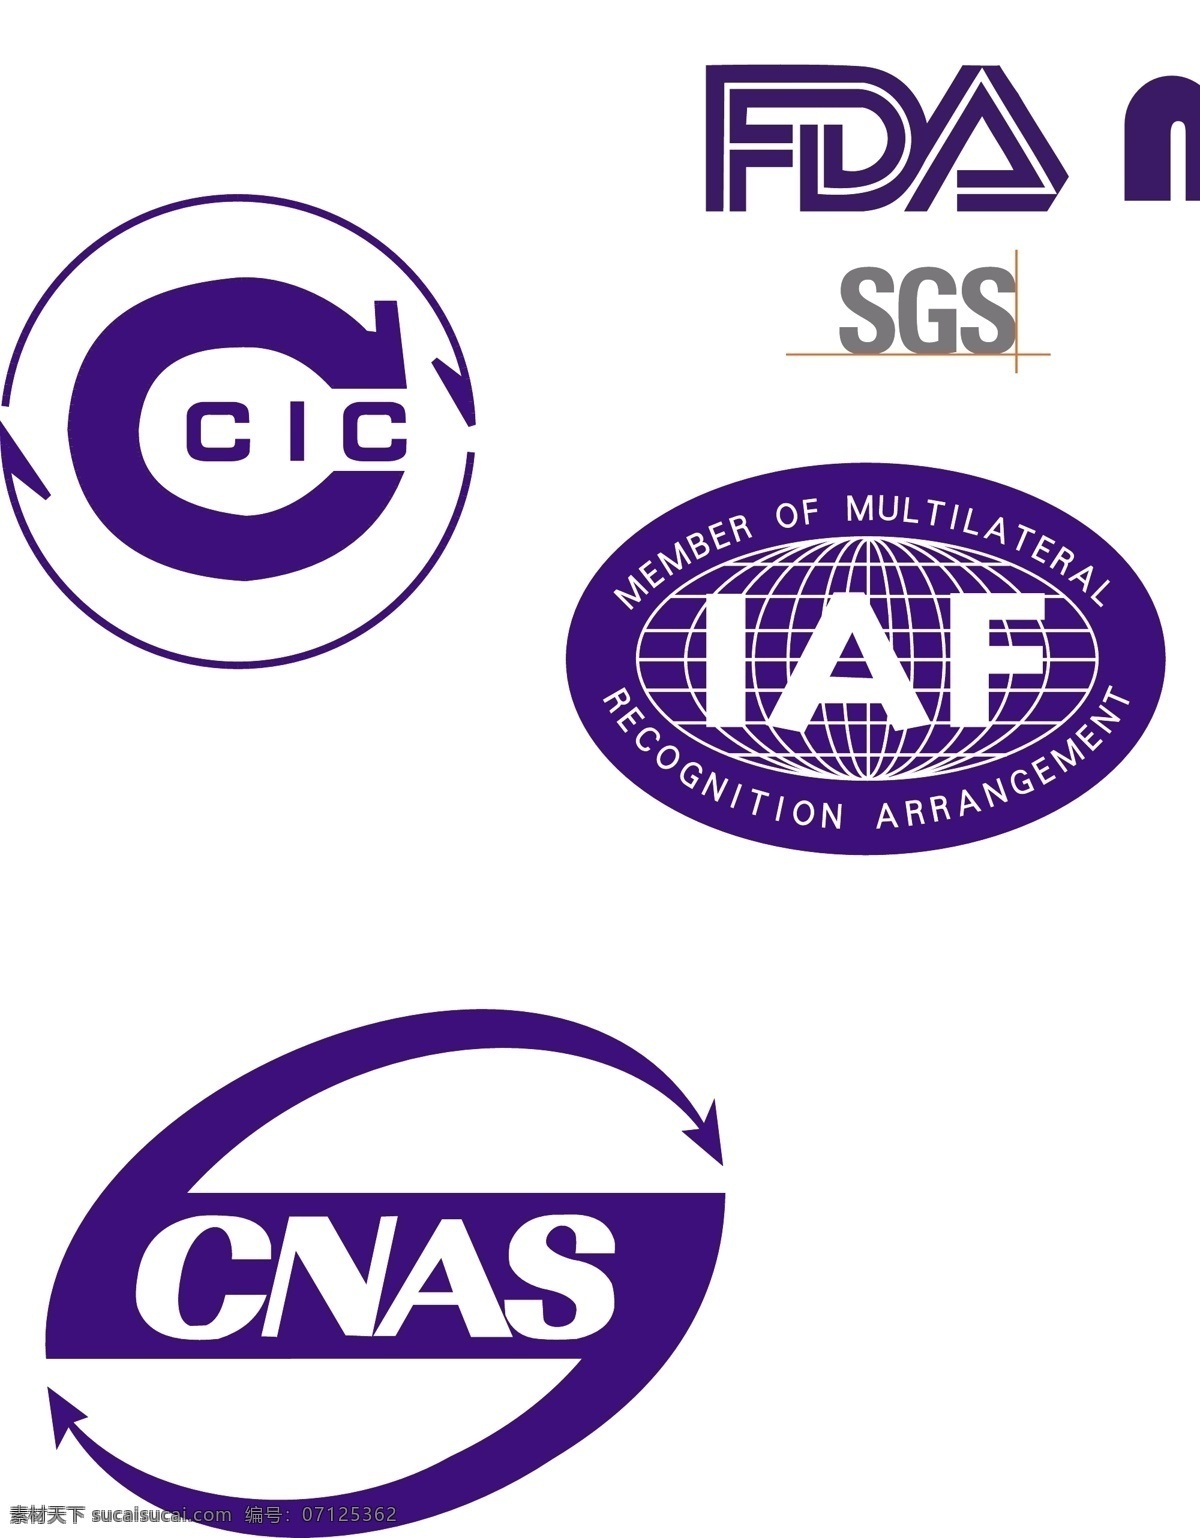 国际认证合集 sgs iso snab anab iaf cnas fda ce rohs 标志图标 公共标识标志